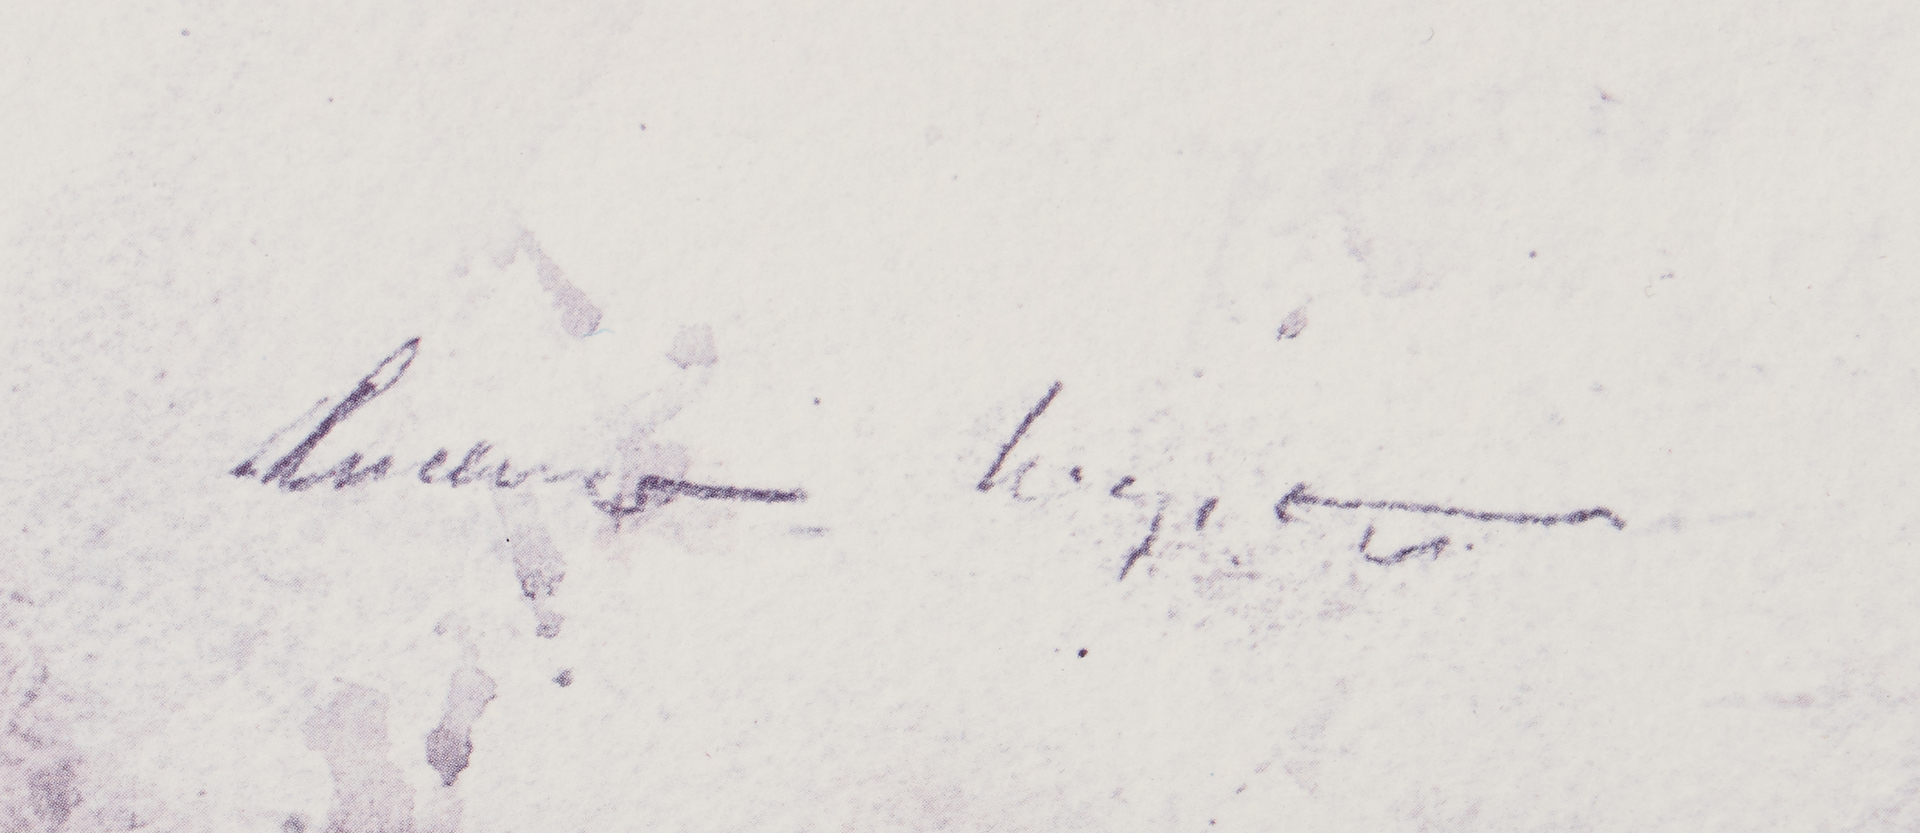 Lot 810: Andrew Wyeth Signed Print, North Light